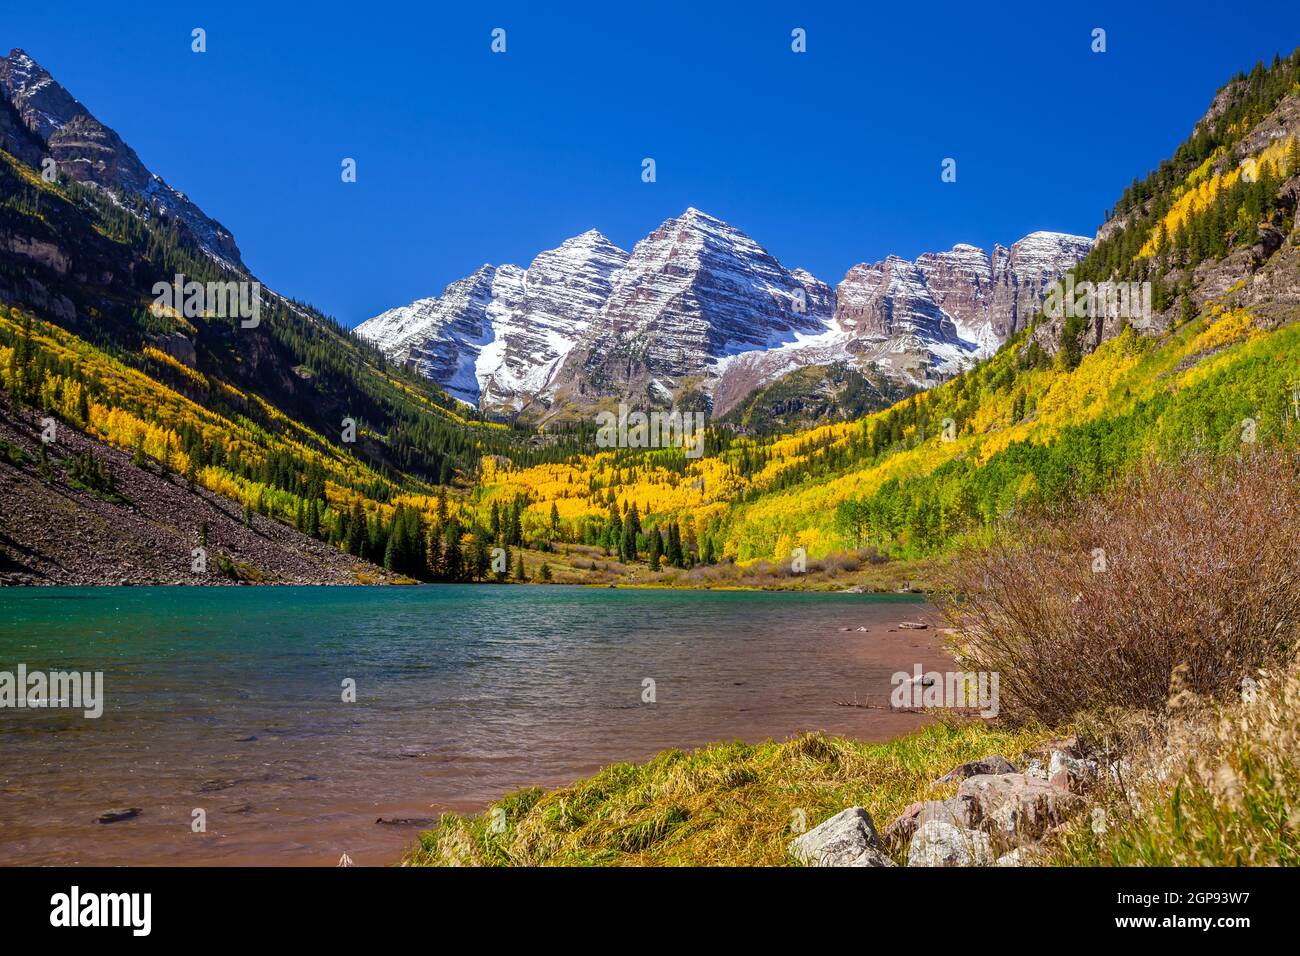 Landscape photo of Maroon bell in Aspen Colorado autumn season, United States Stock Photo